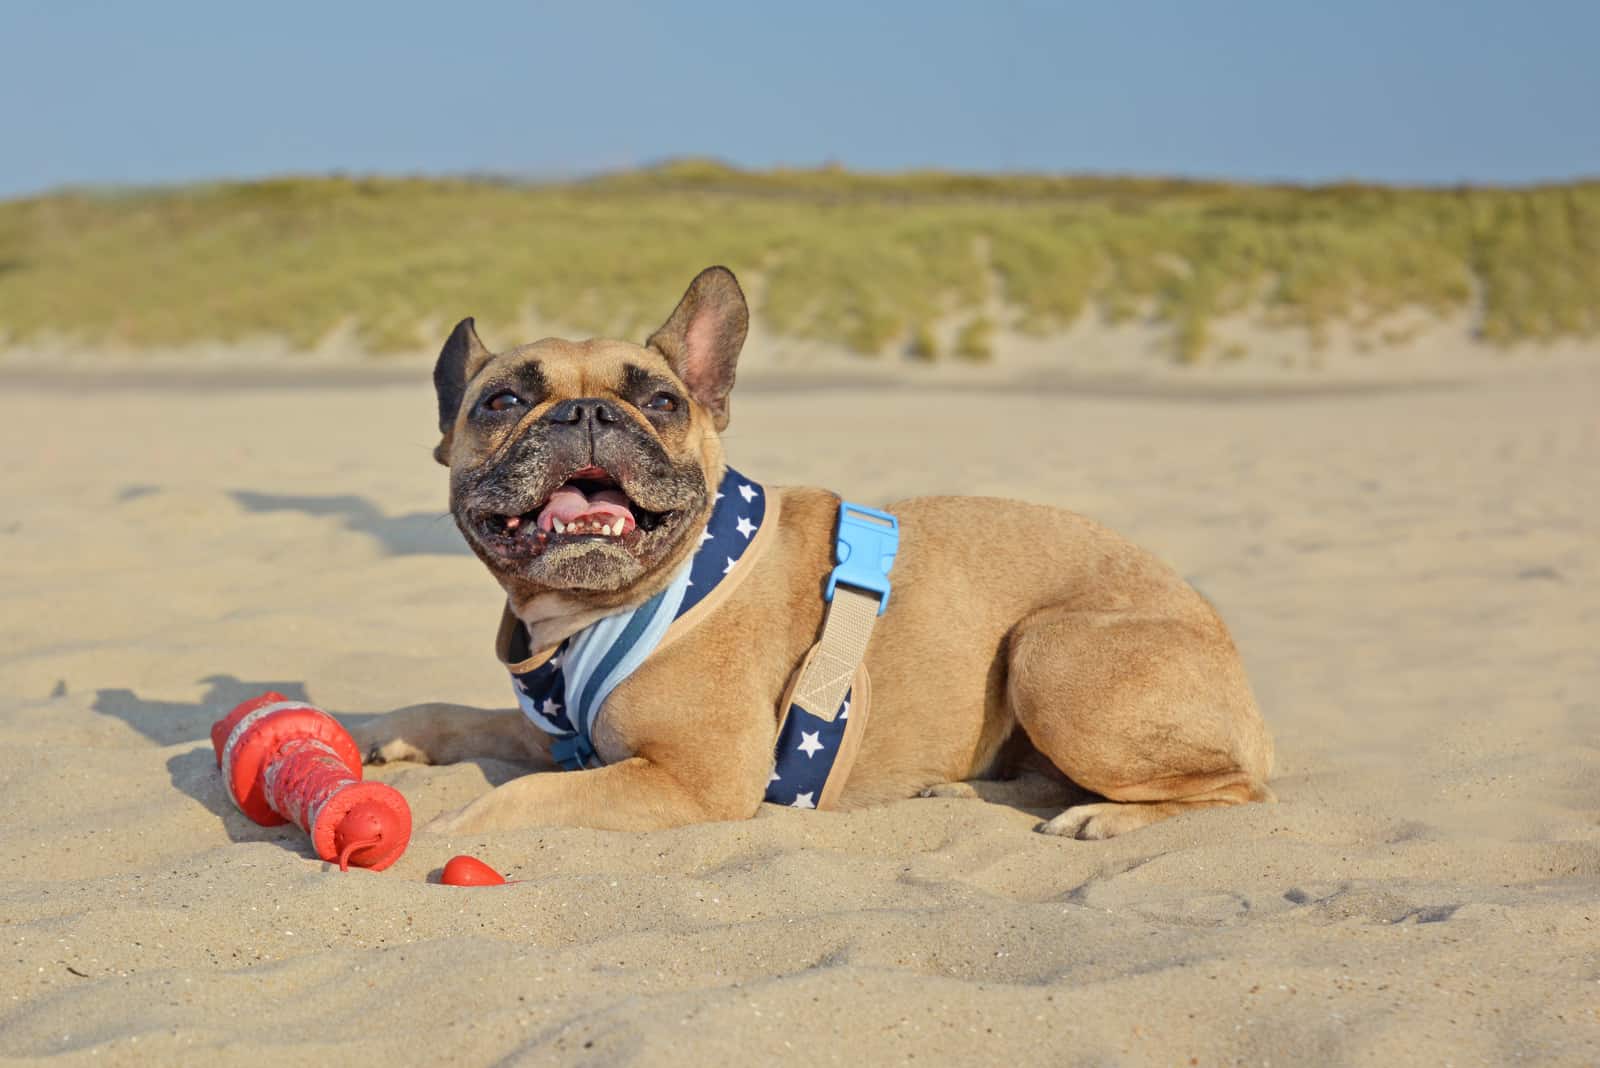 French Bulldog lies on a sandy beach